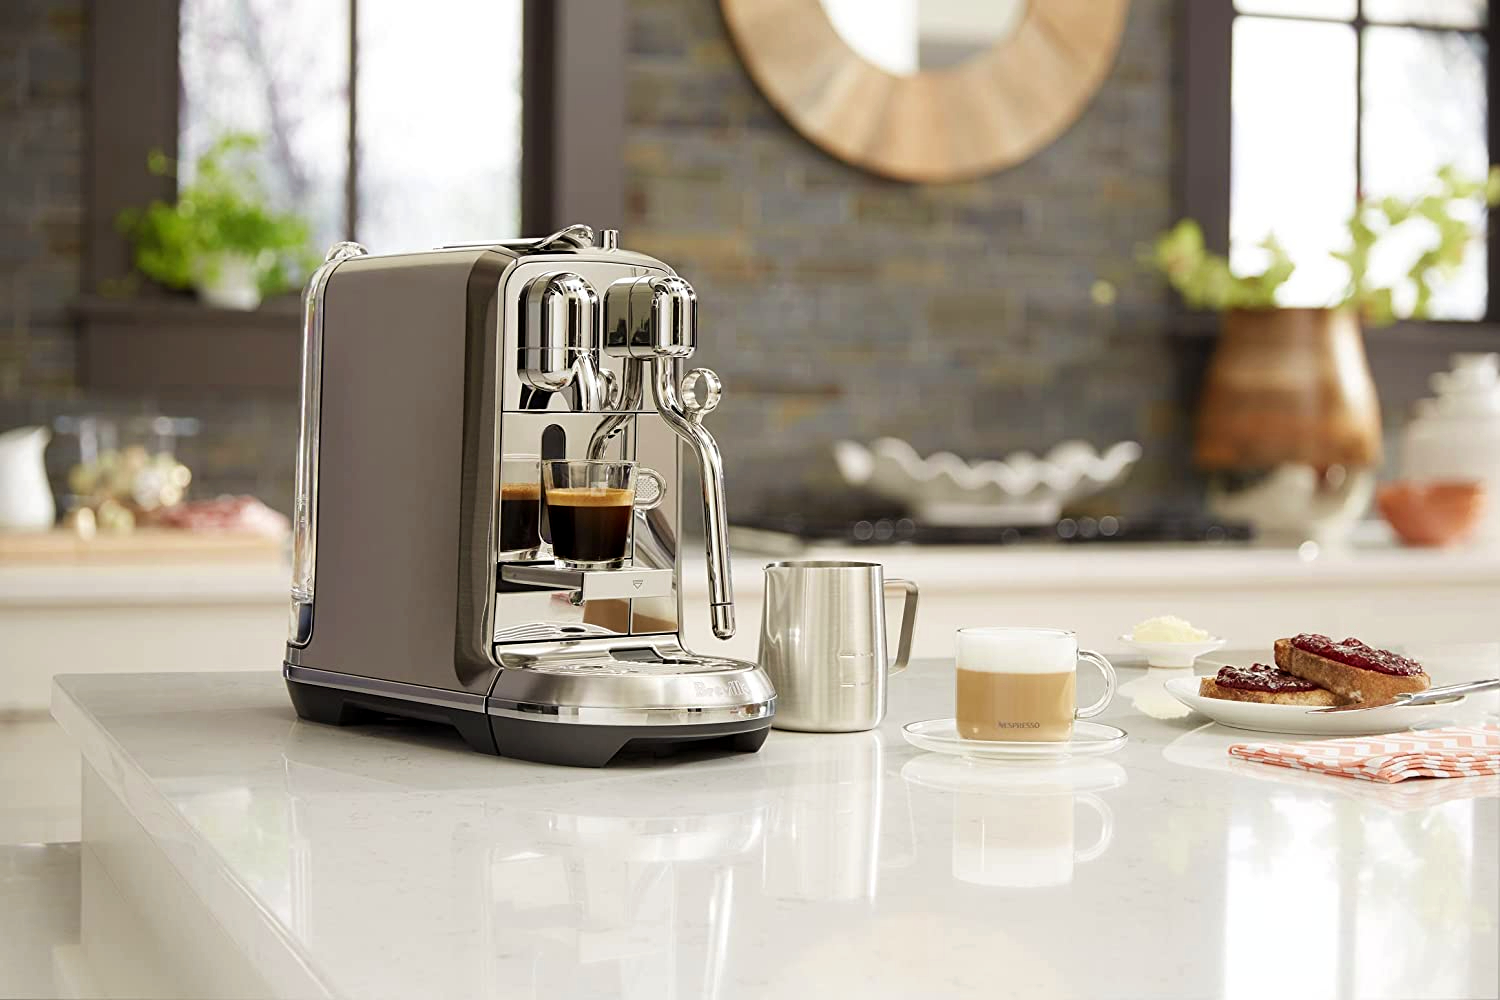 https://www.digitaltrends.com/wp-content/uploads/2020/06/breville-nespresso-usa-nespresso-creatista-plus-coffee-espresso-machine-1.jpg?p=1